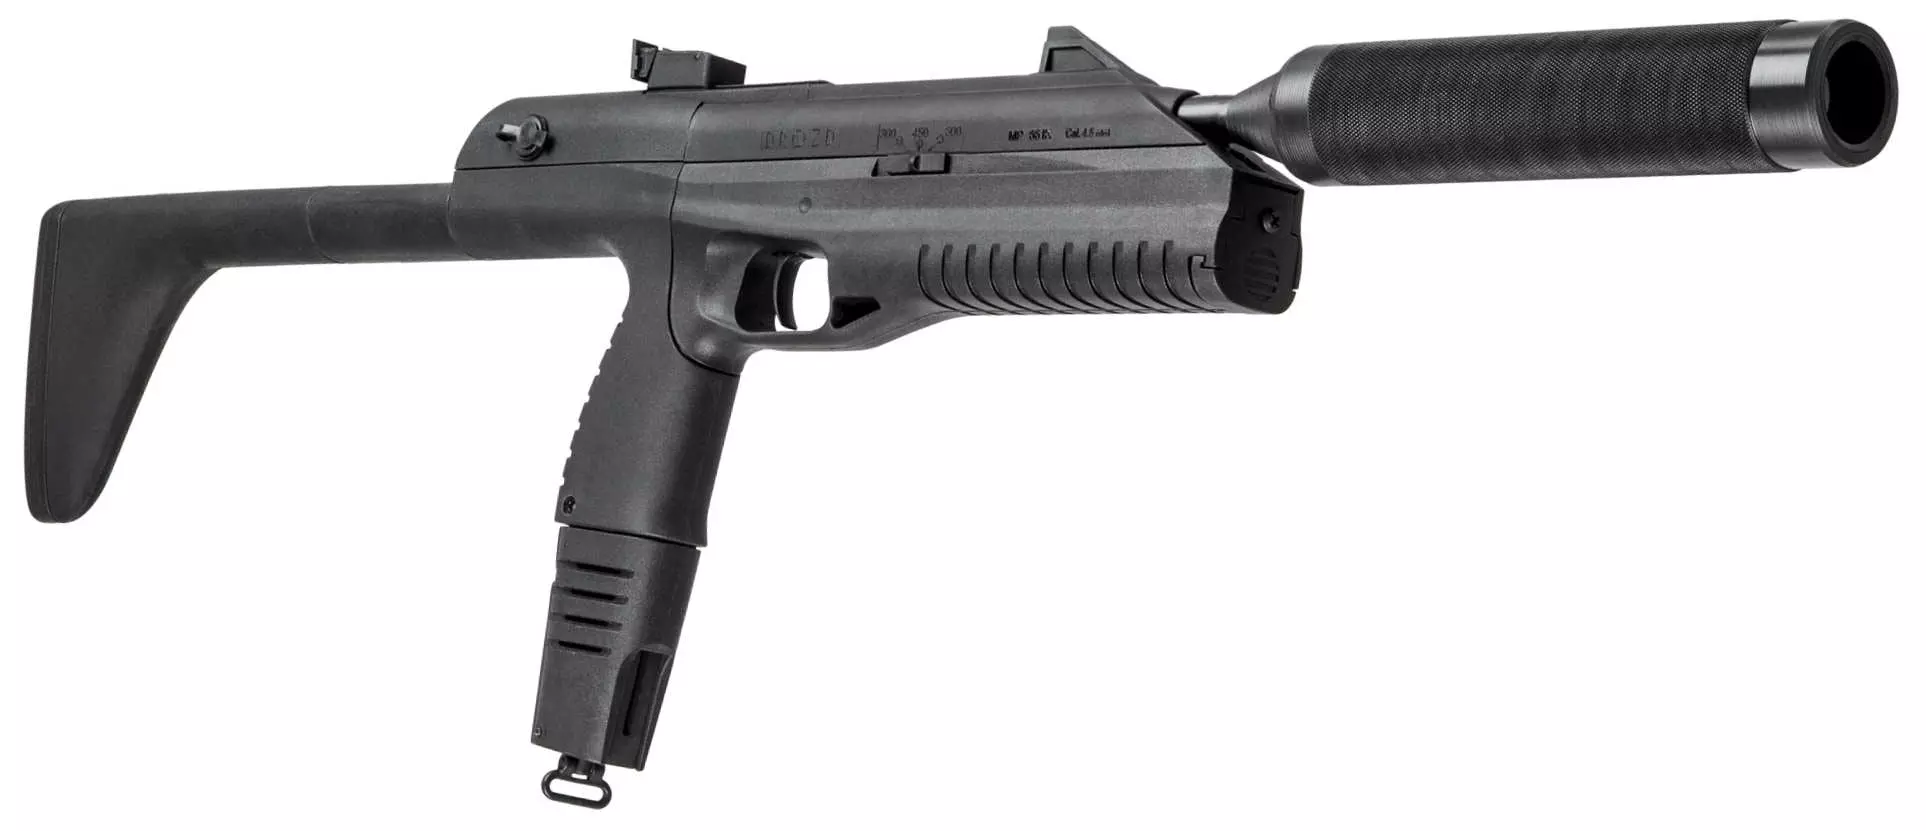 MR661 SMG laser tag gun front